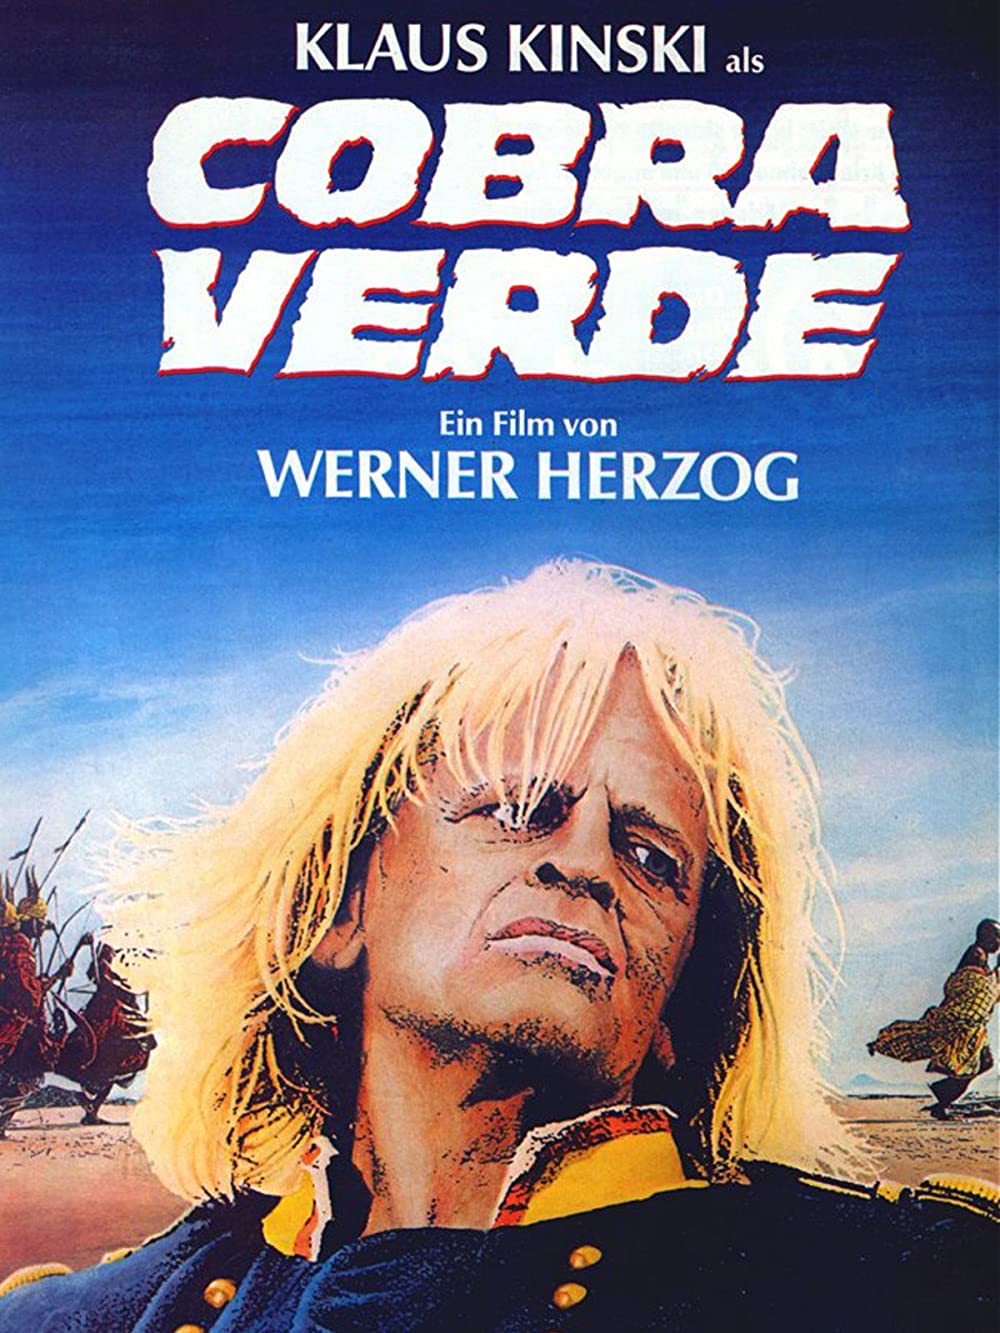 Filmbeschreibung zu Cobra Verde